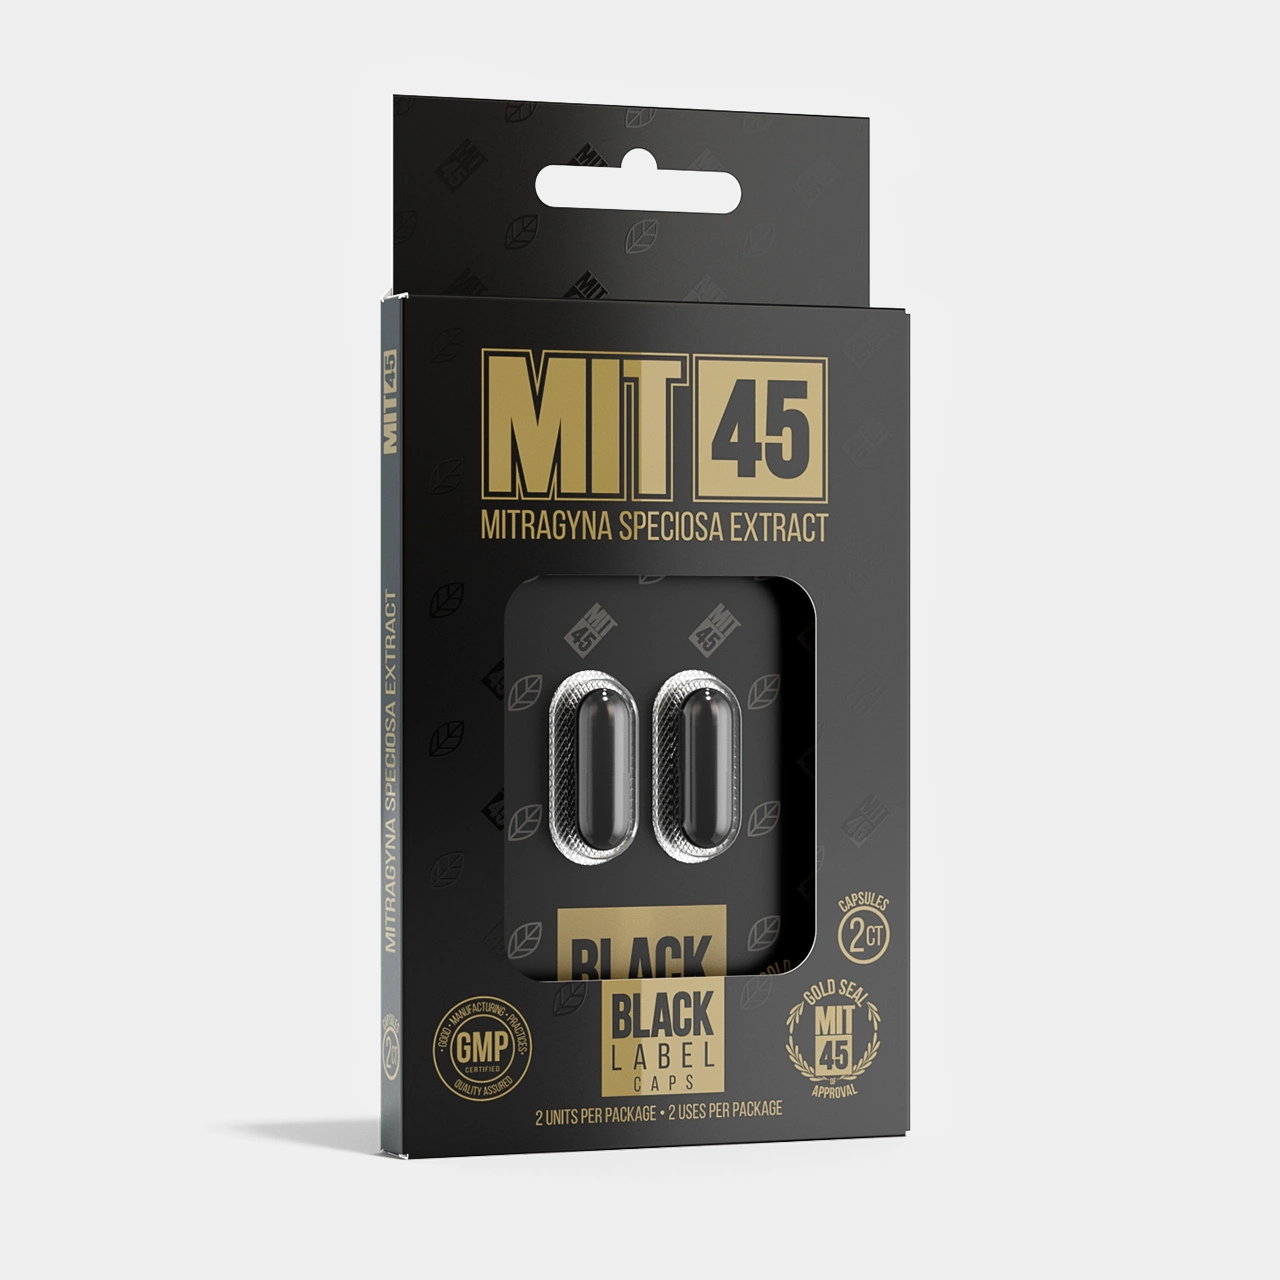 MIT45 Black Label 2 pack product shot